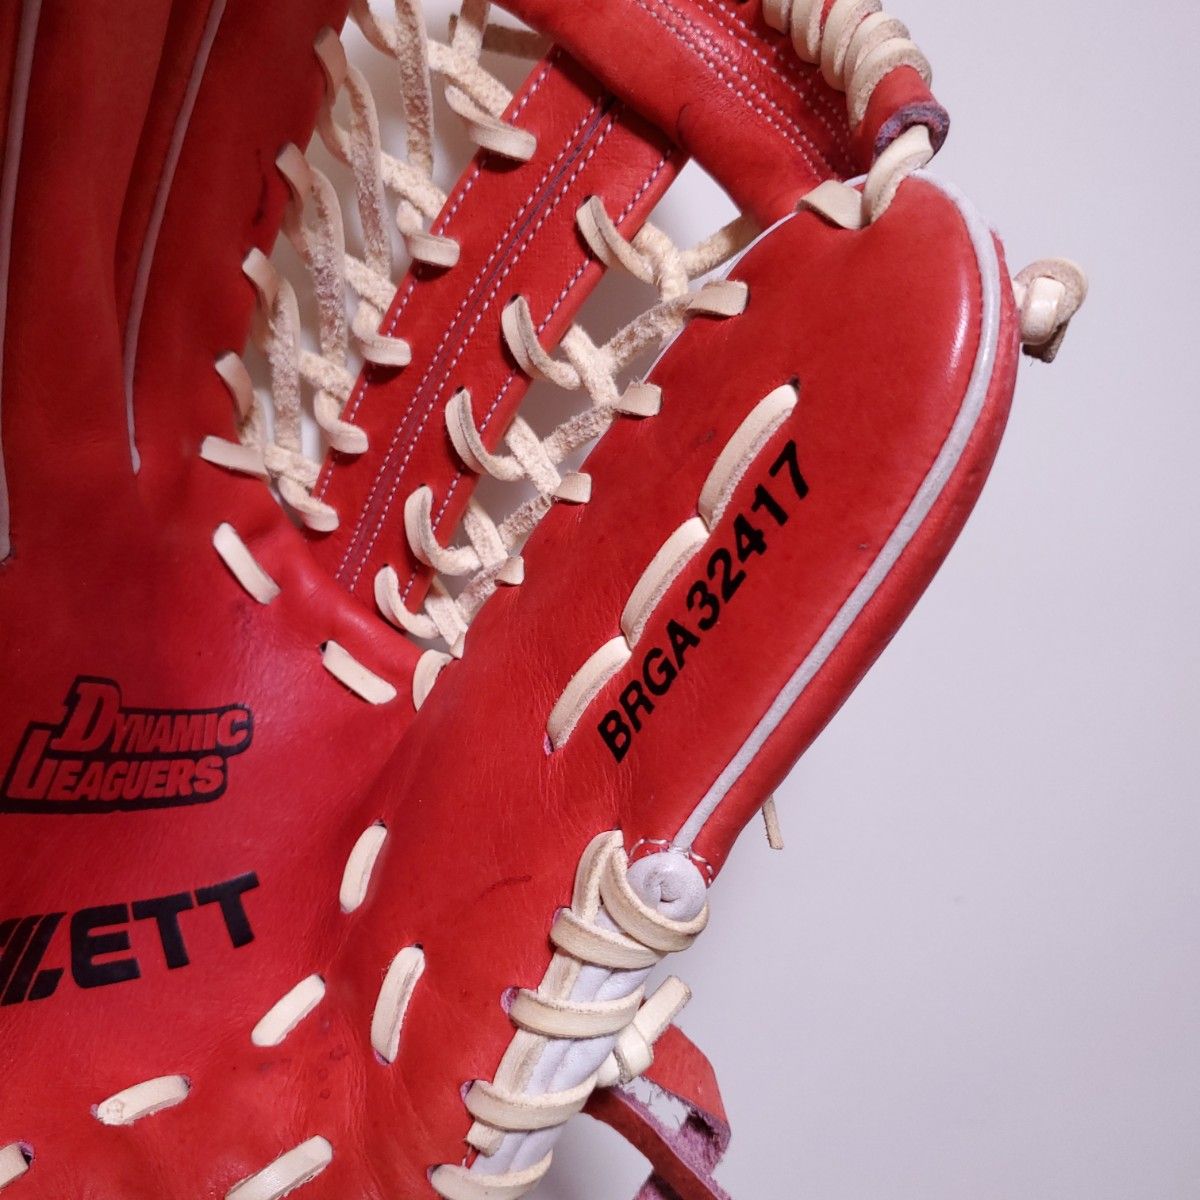 ZETT 一般軟式 外野手用グラブ ゼット 赤星憲広モデル 日本製 本人使用カラー 大人用サイズ 野球 グローブ